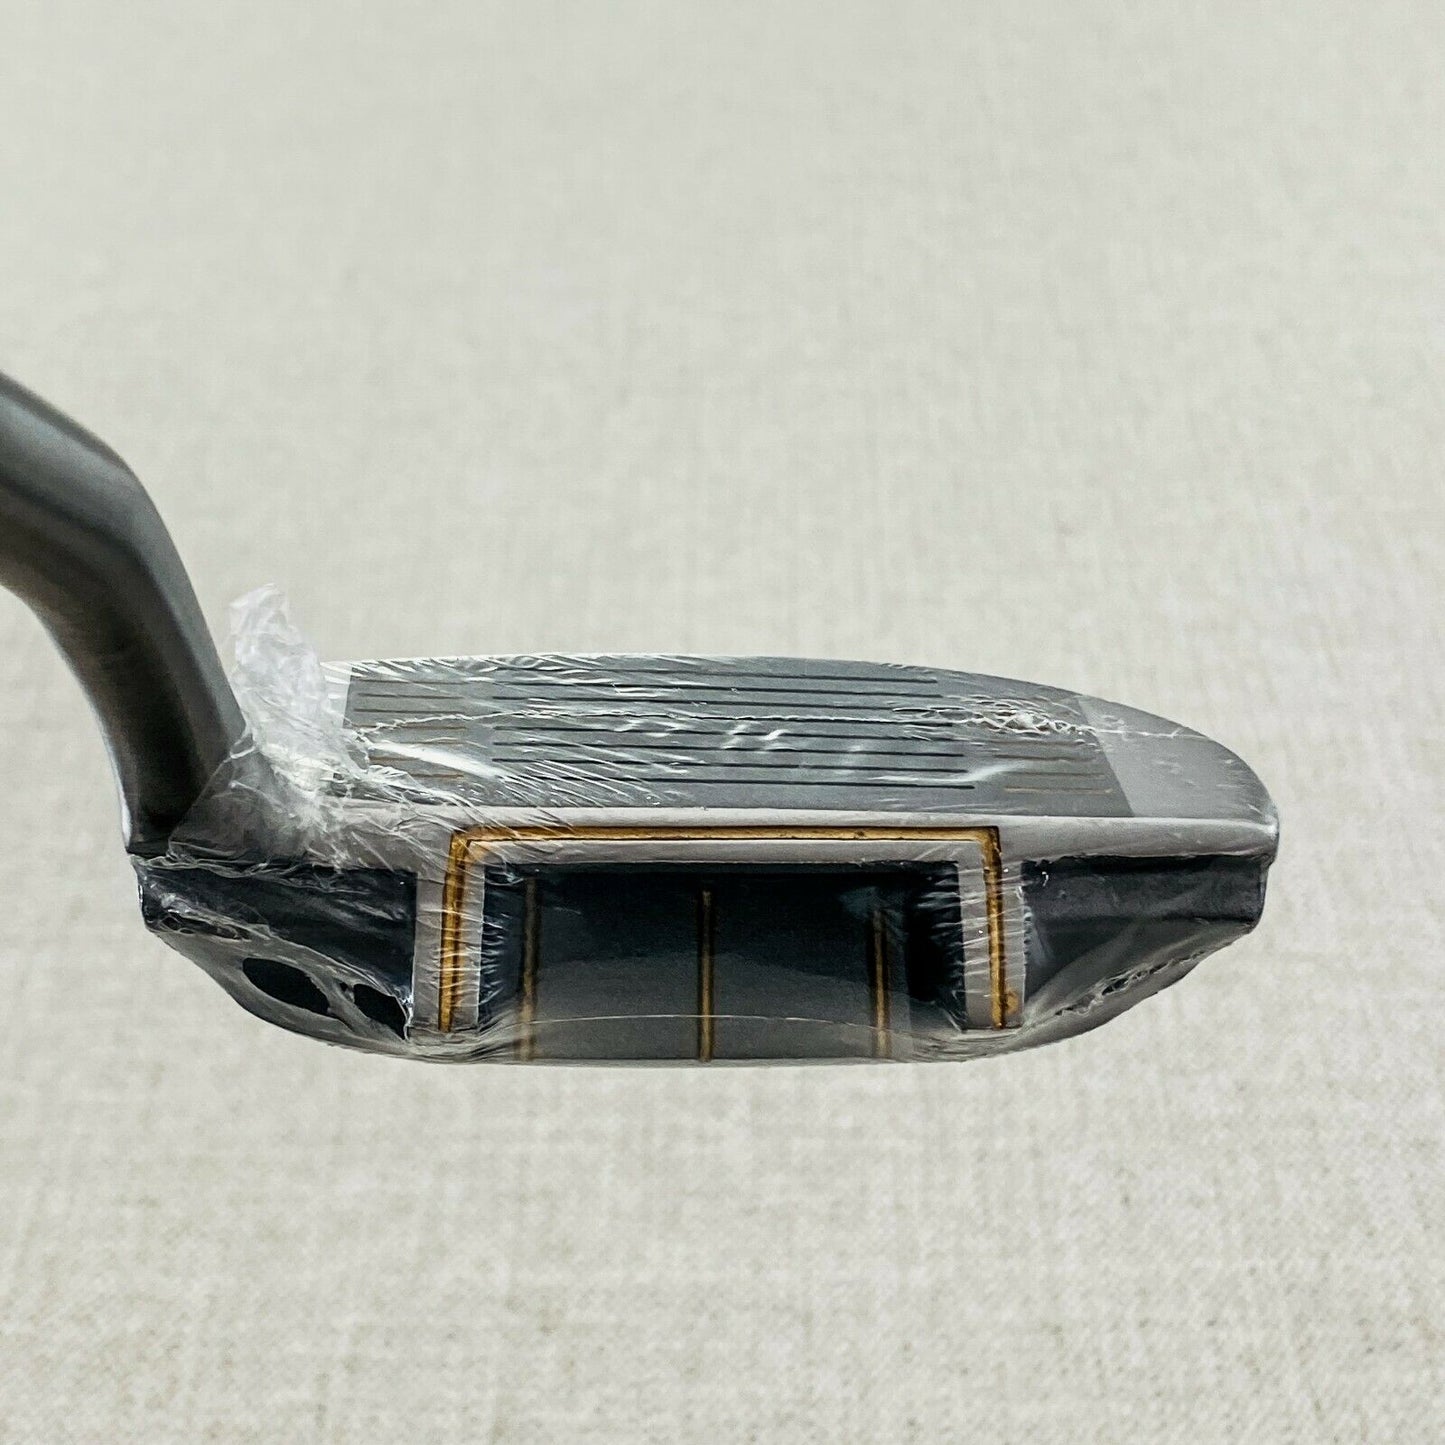 Dynacast Shur-Shot Chipper. 35 inch - Brand New # 9606